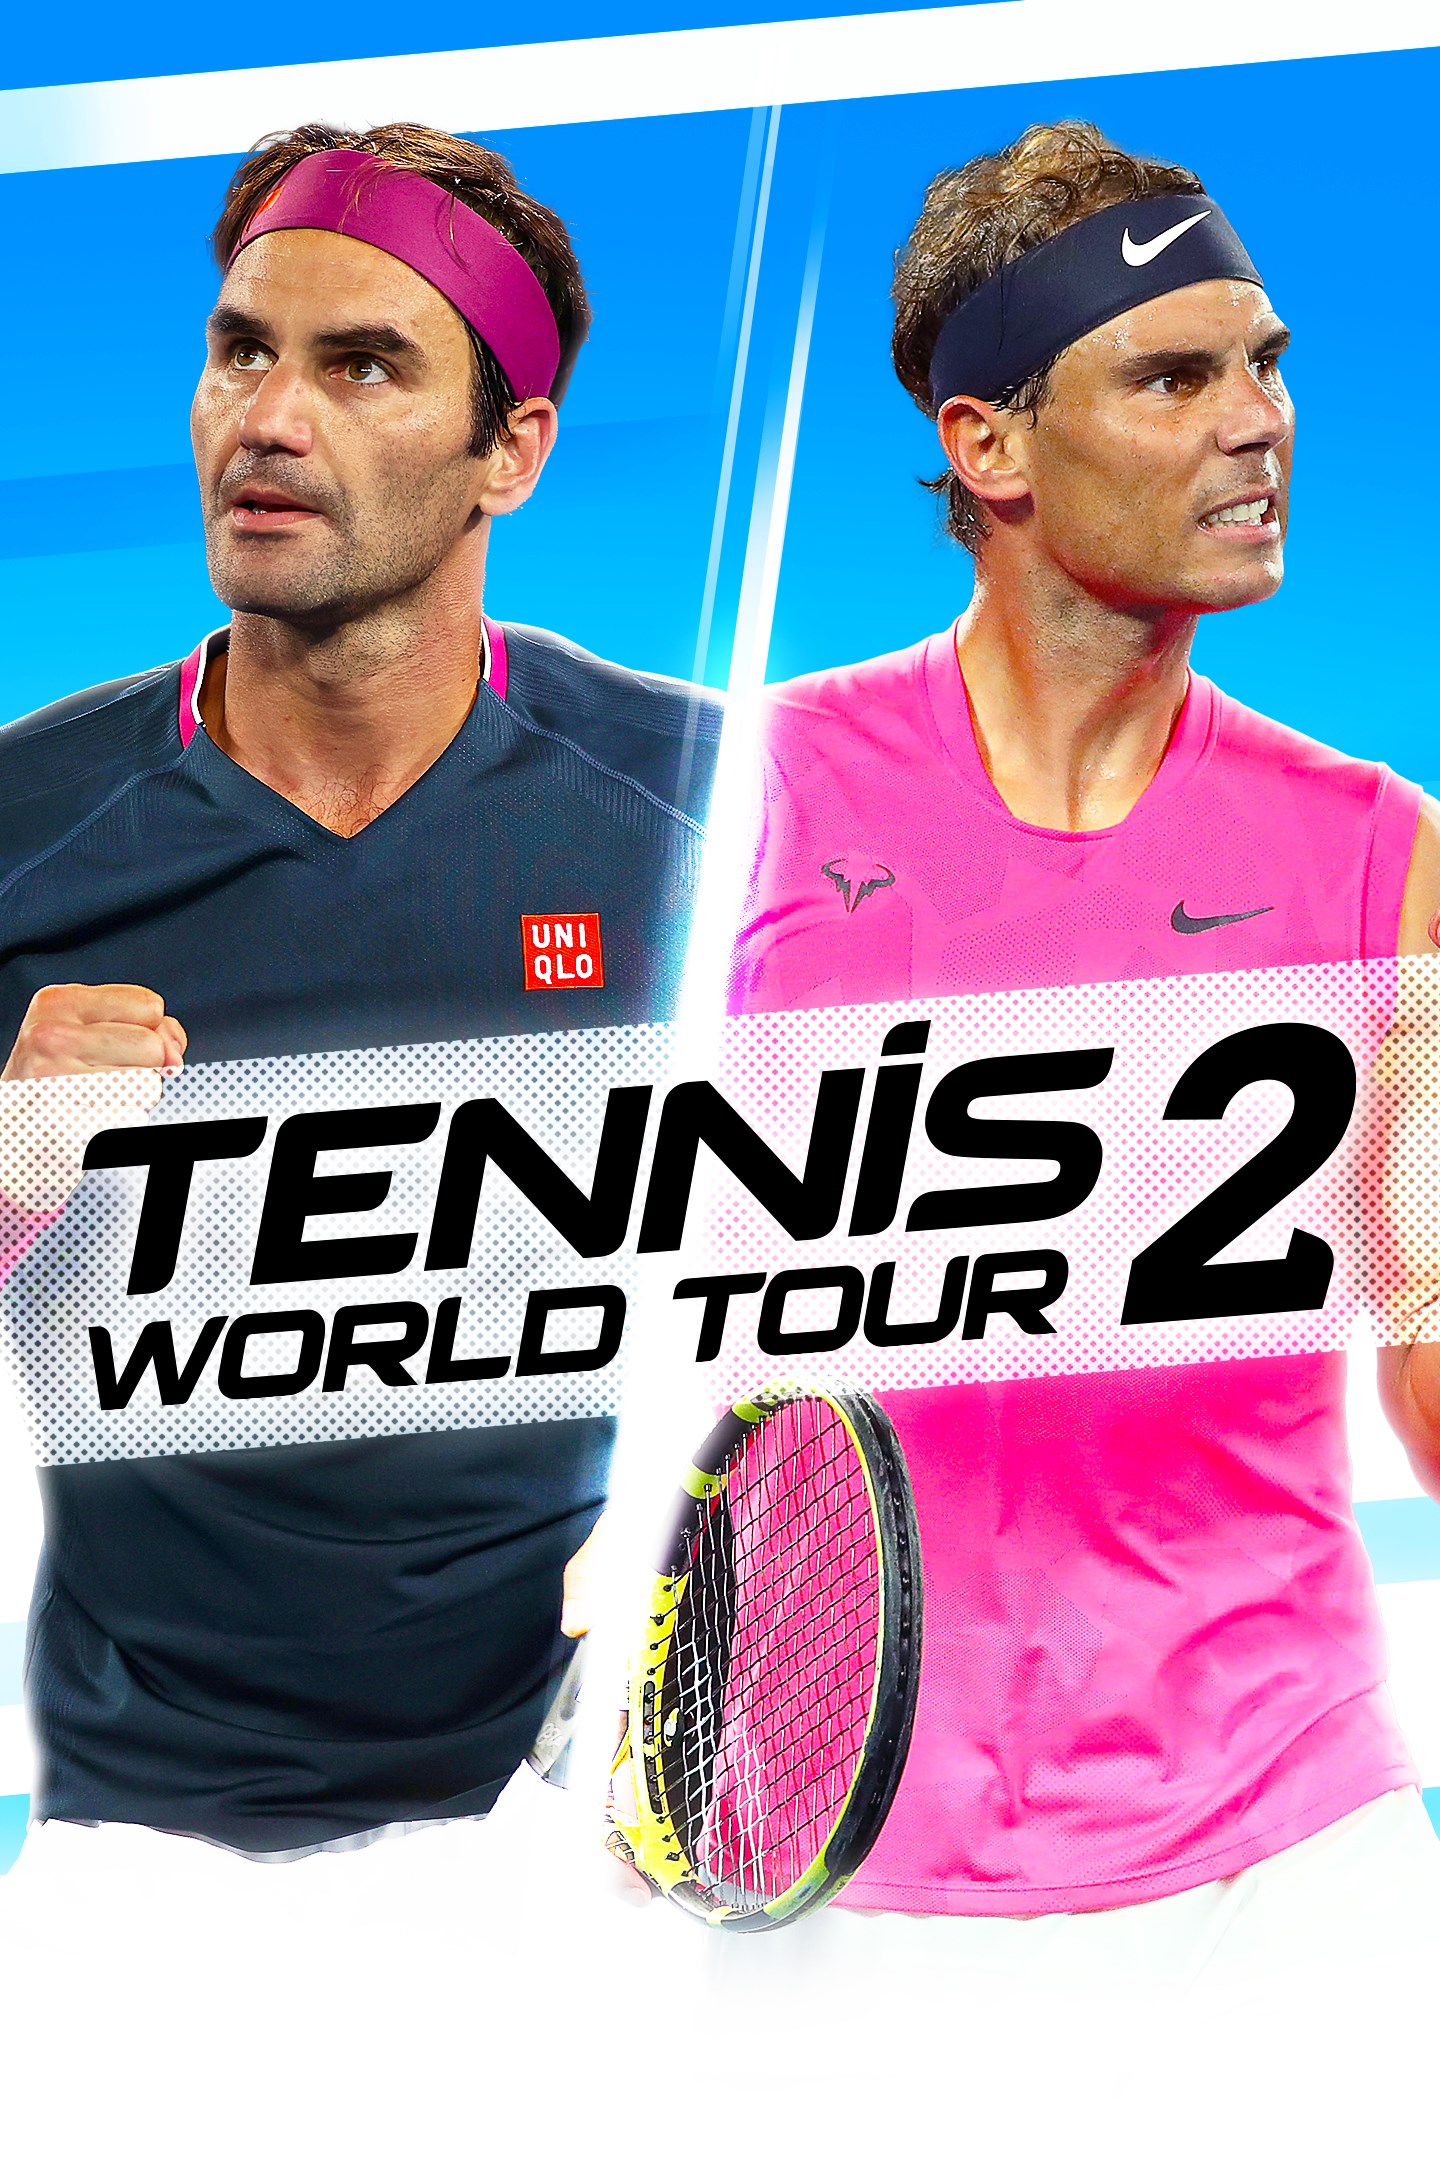 Tennis World Tour 2 boxshot